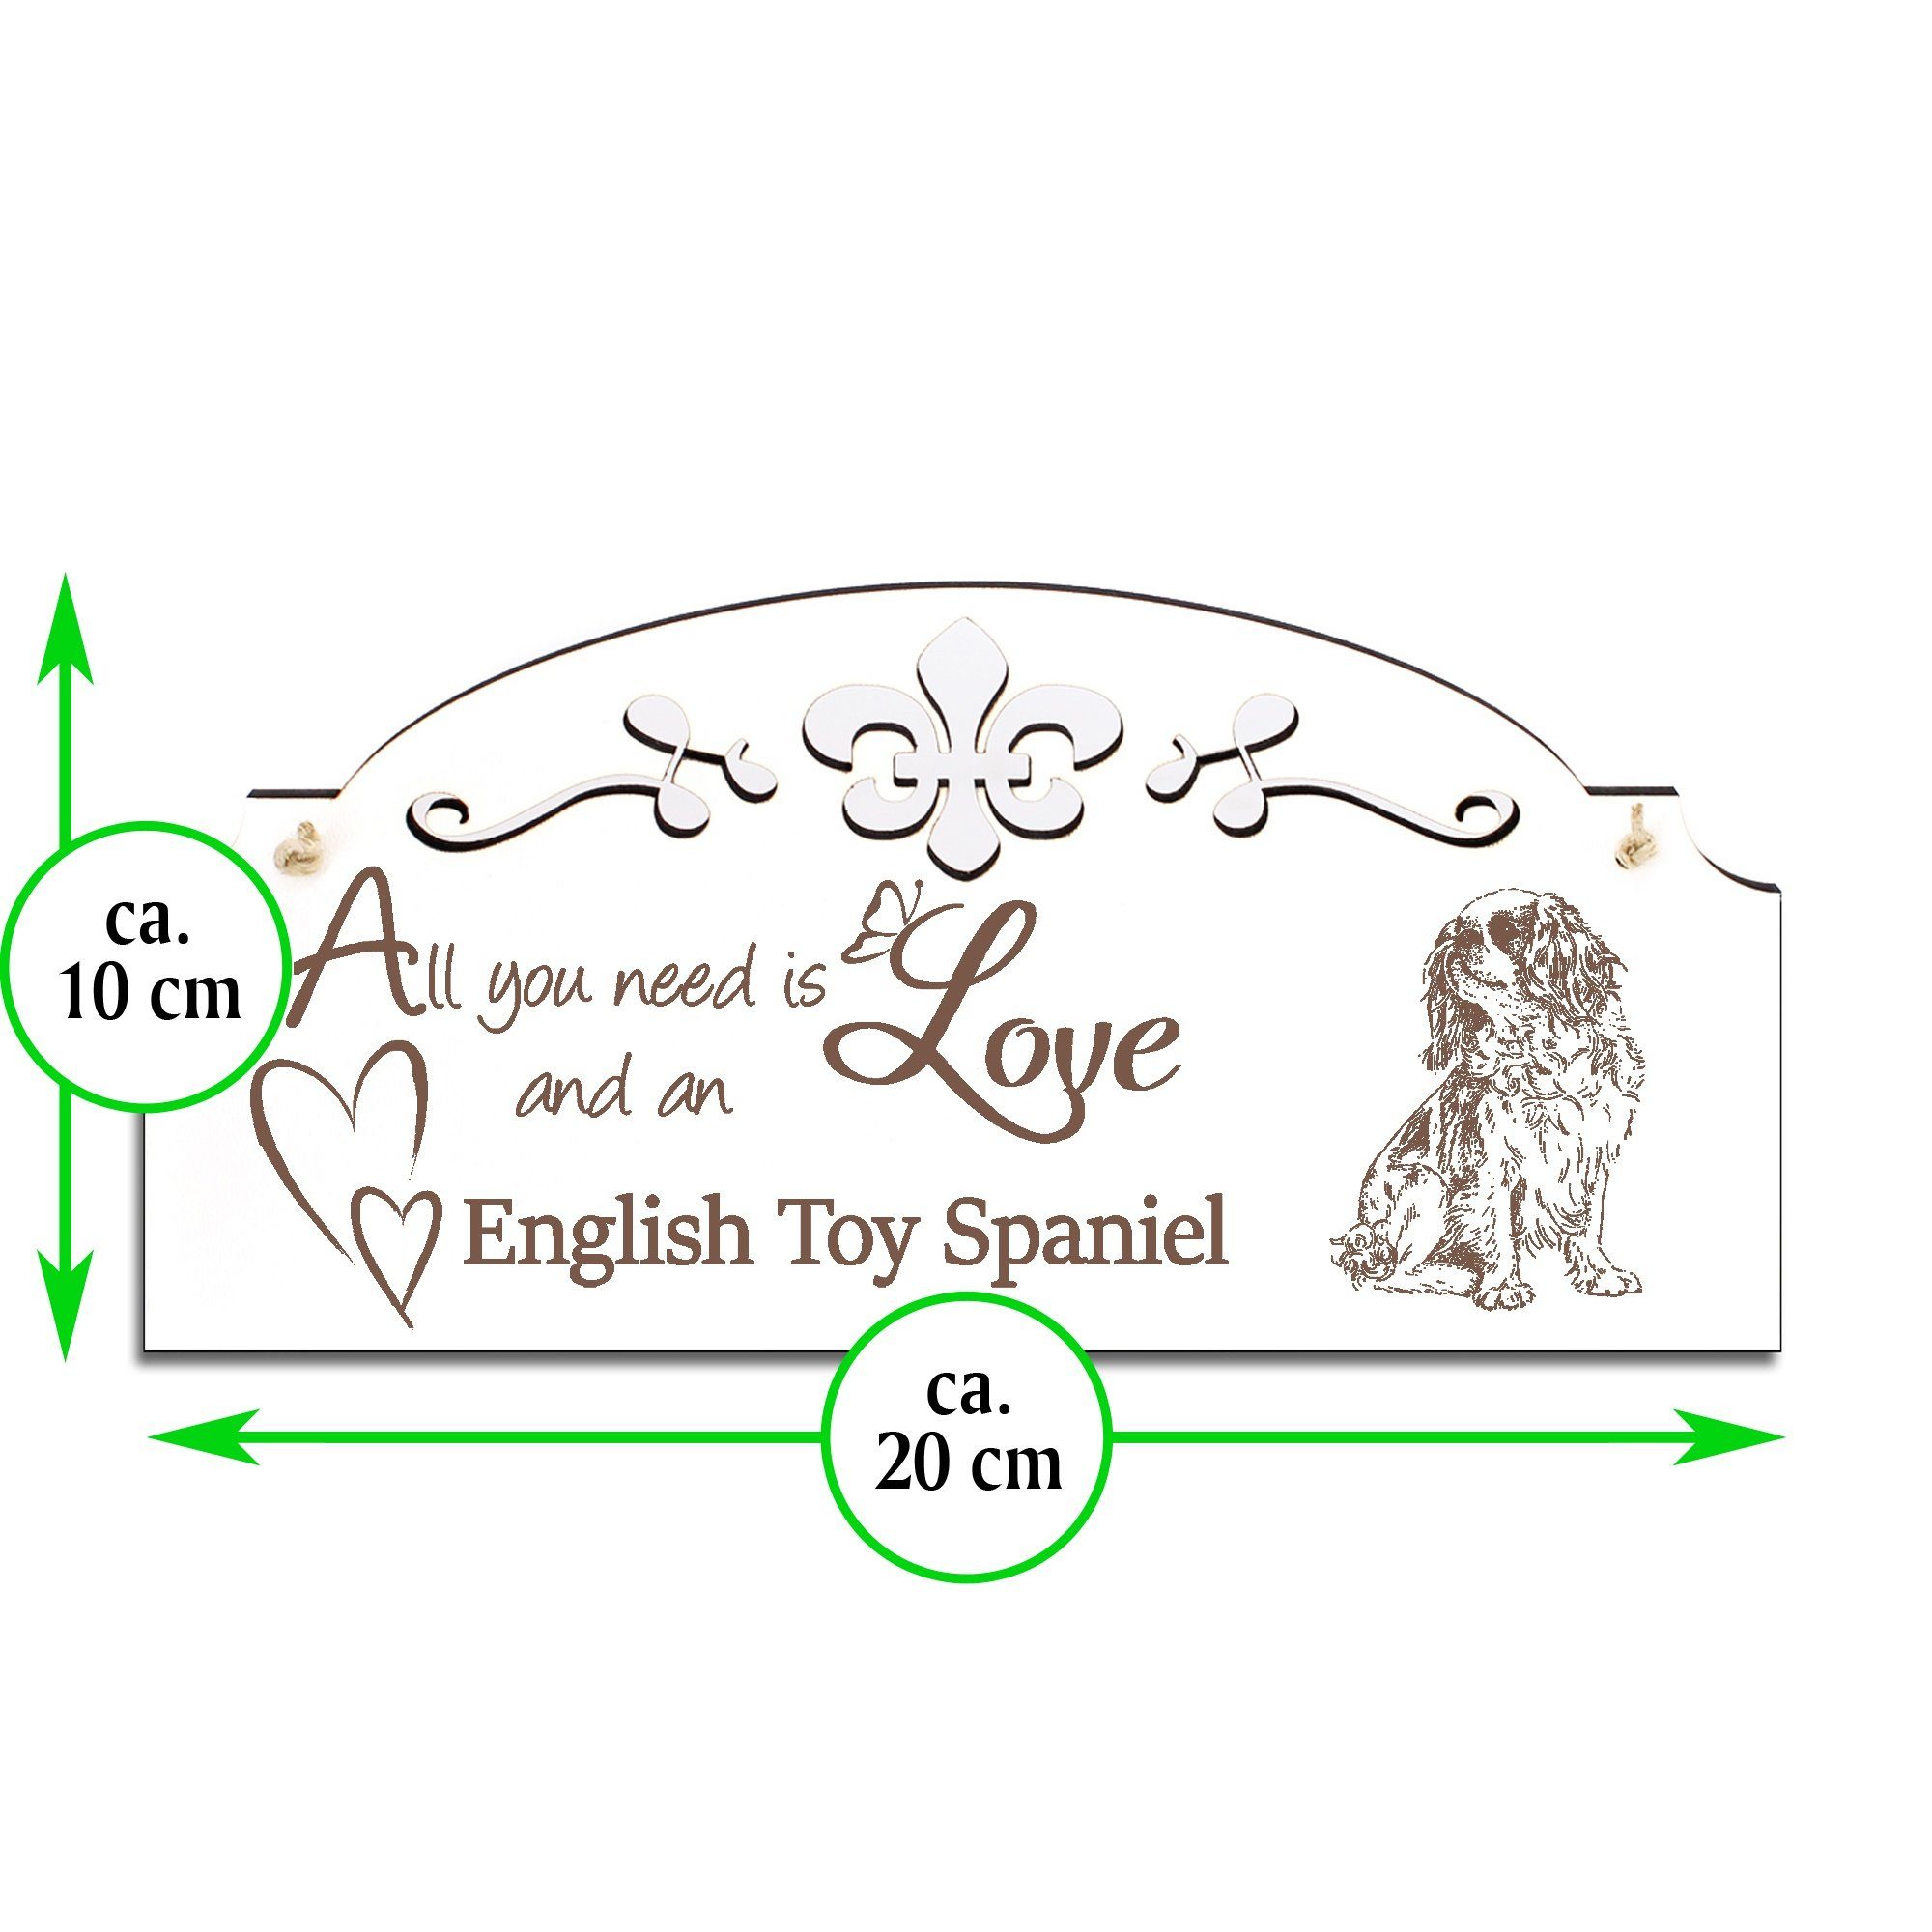 Spaniel is 20x10cm Toy Hängedekoration English need Love you All Deko Dekolando